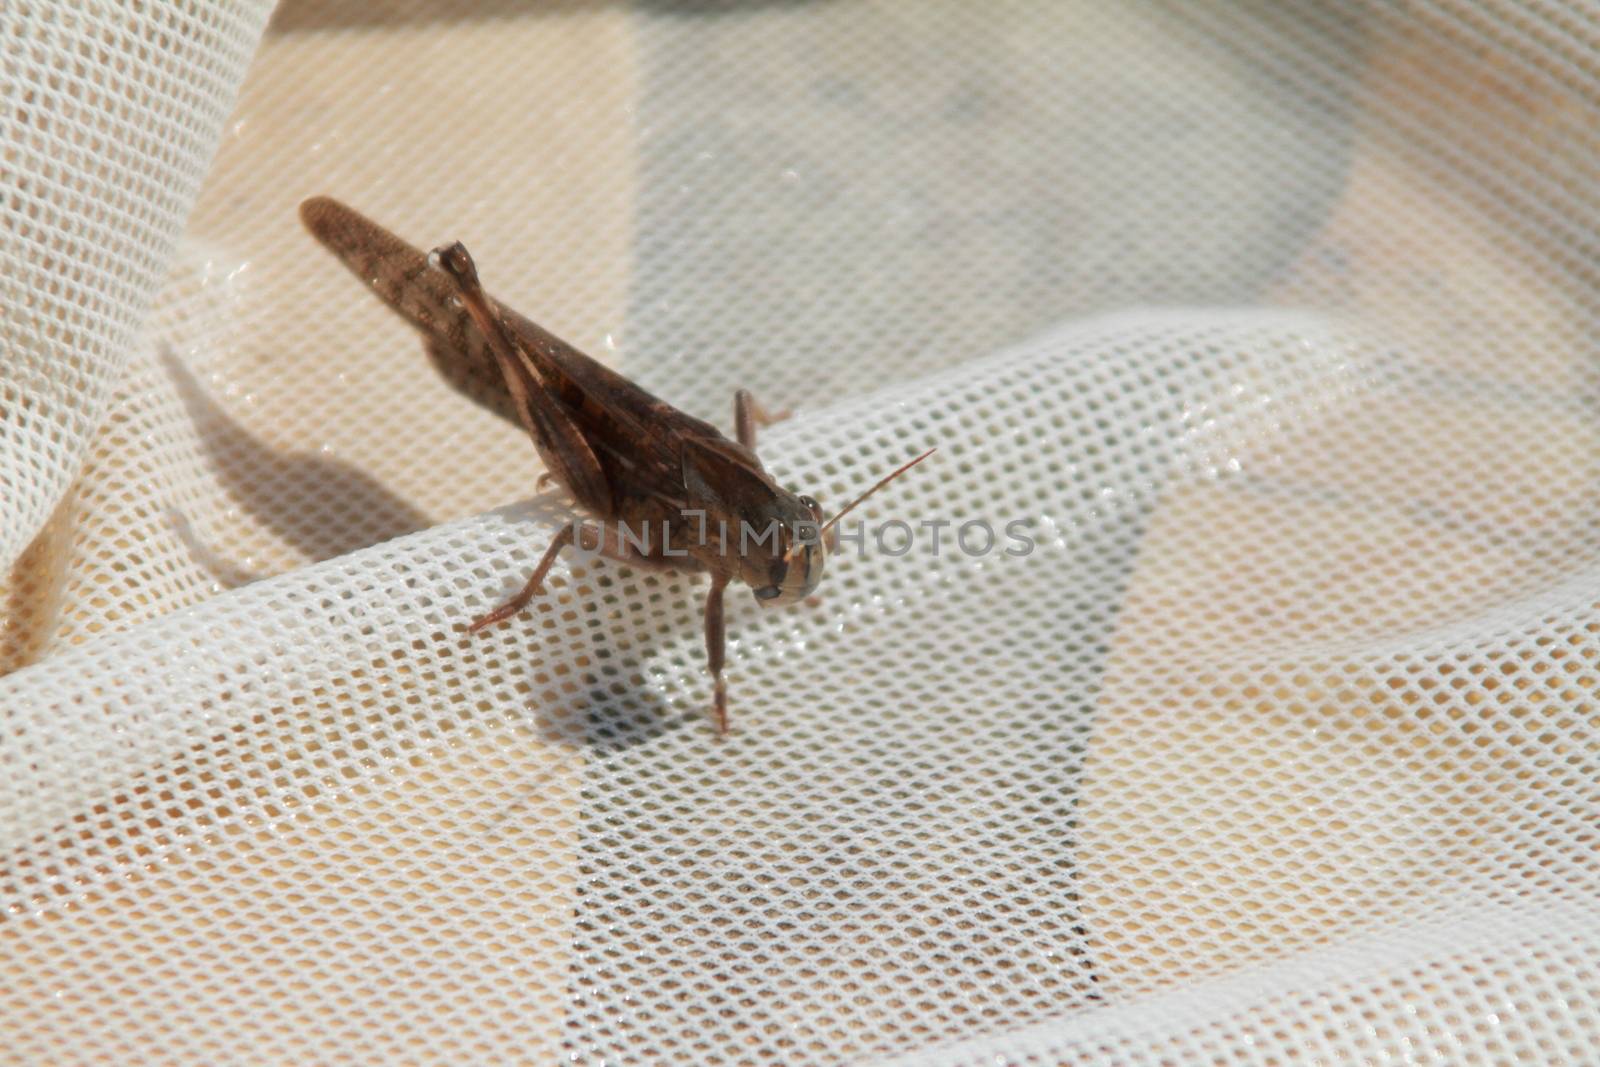 grasshopper on a net by mitzy